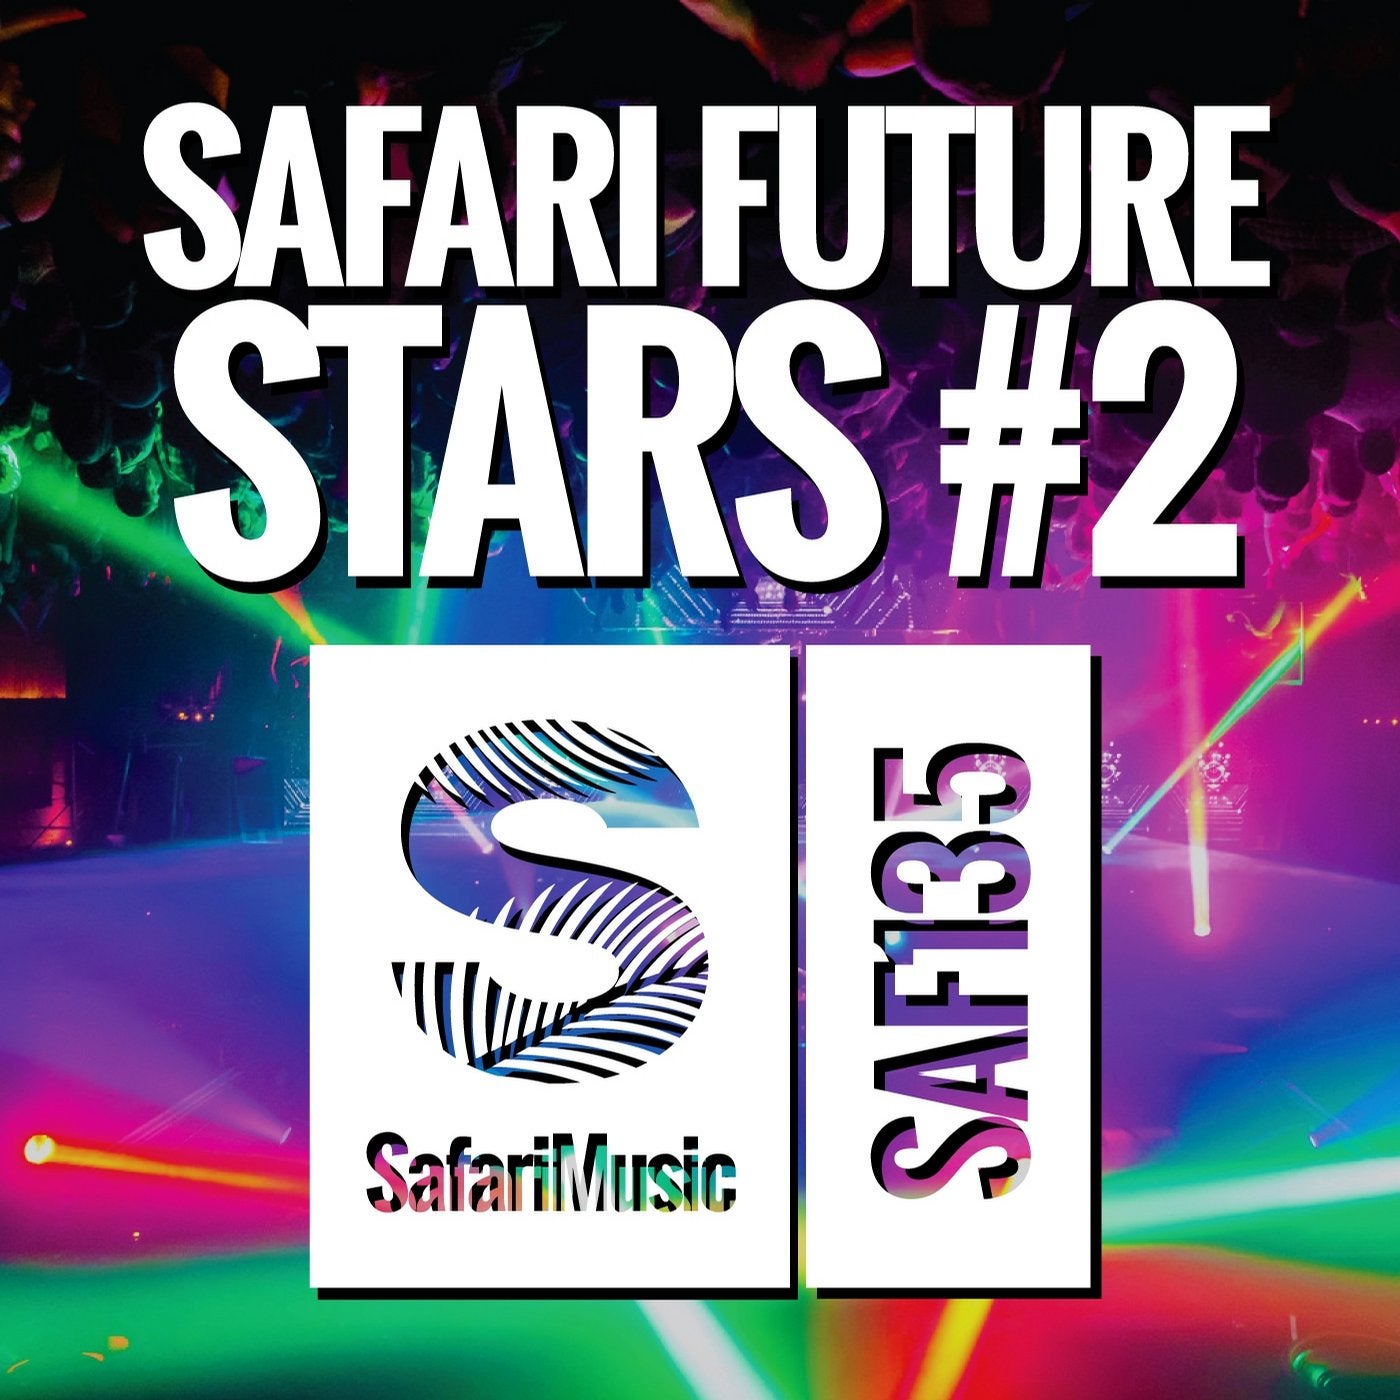 Safari Future Stars #2